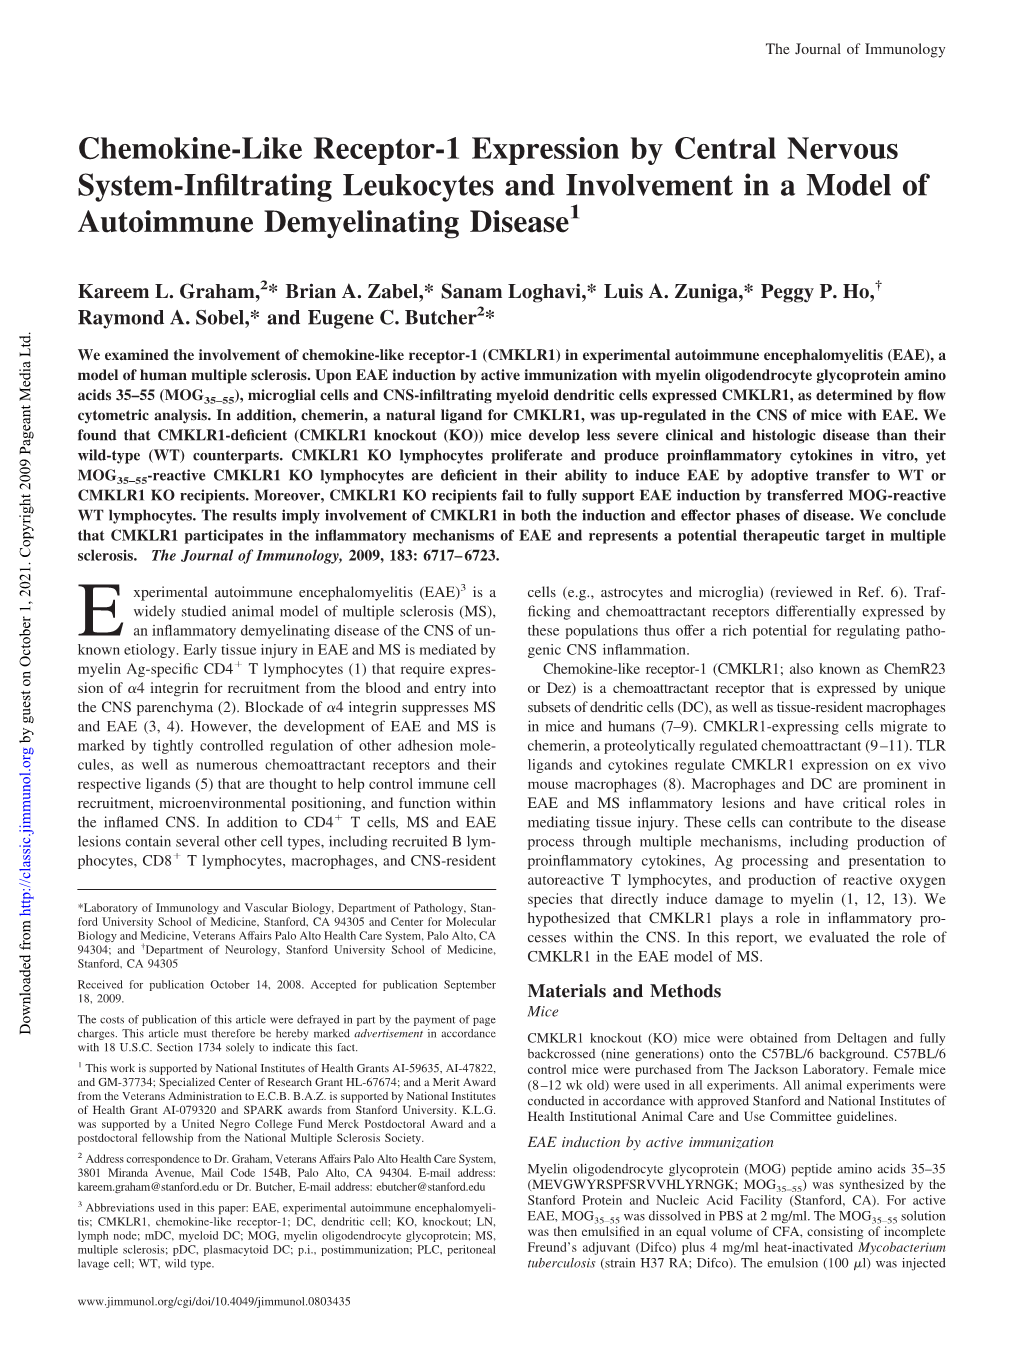 Autoimmune Demyelinating Disease Leukocytes and Involvement in A